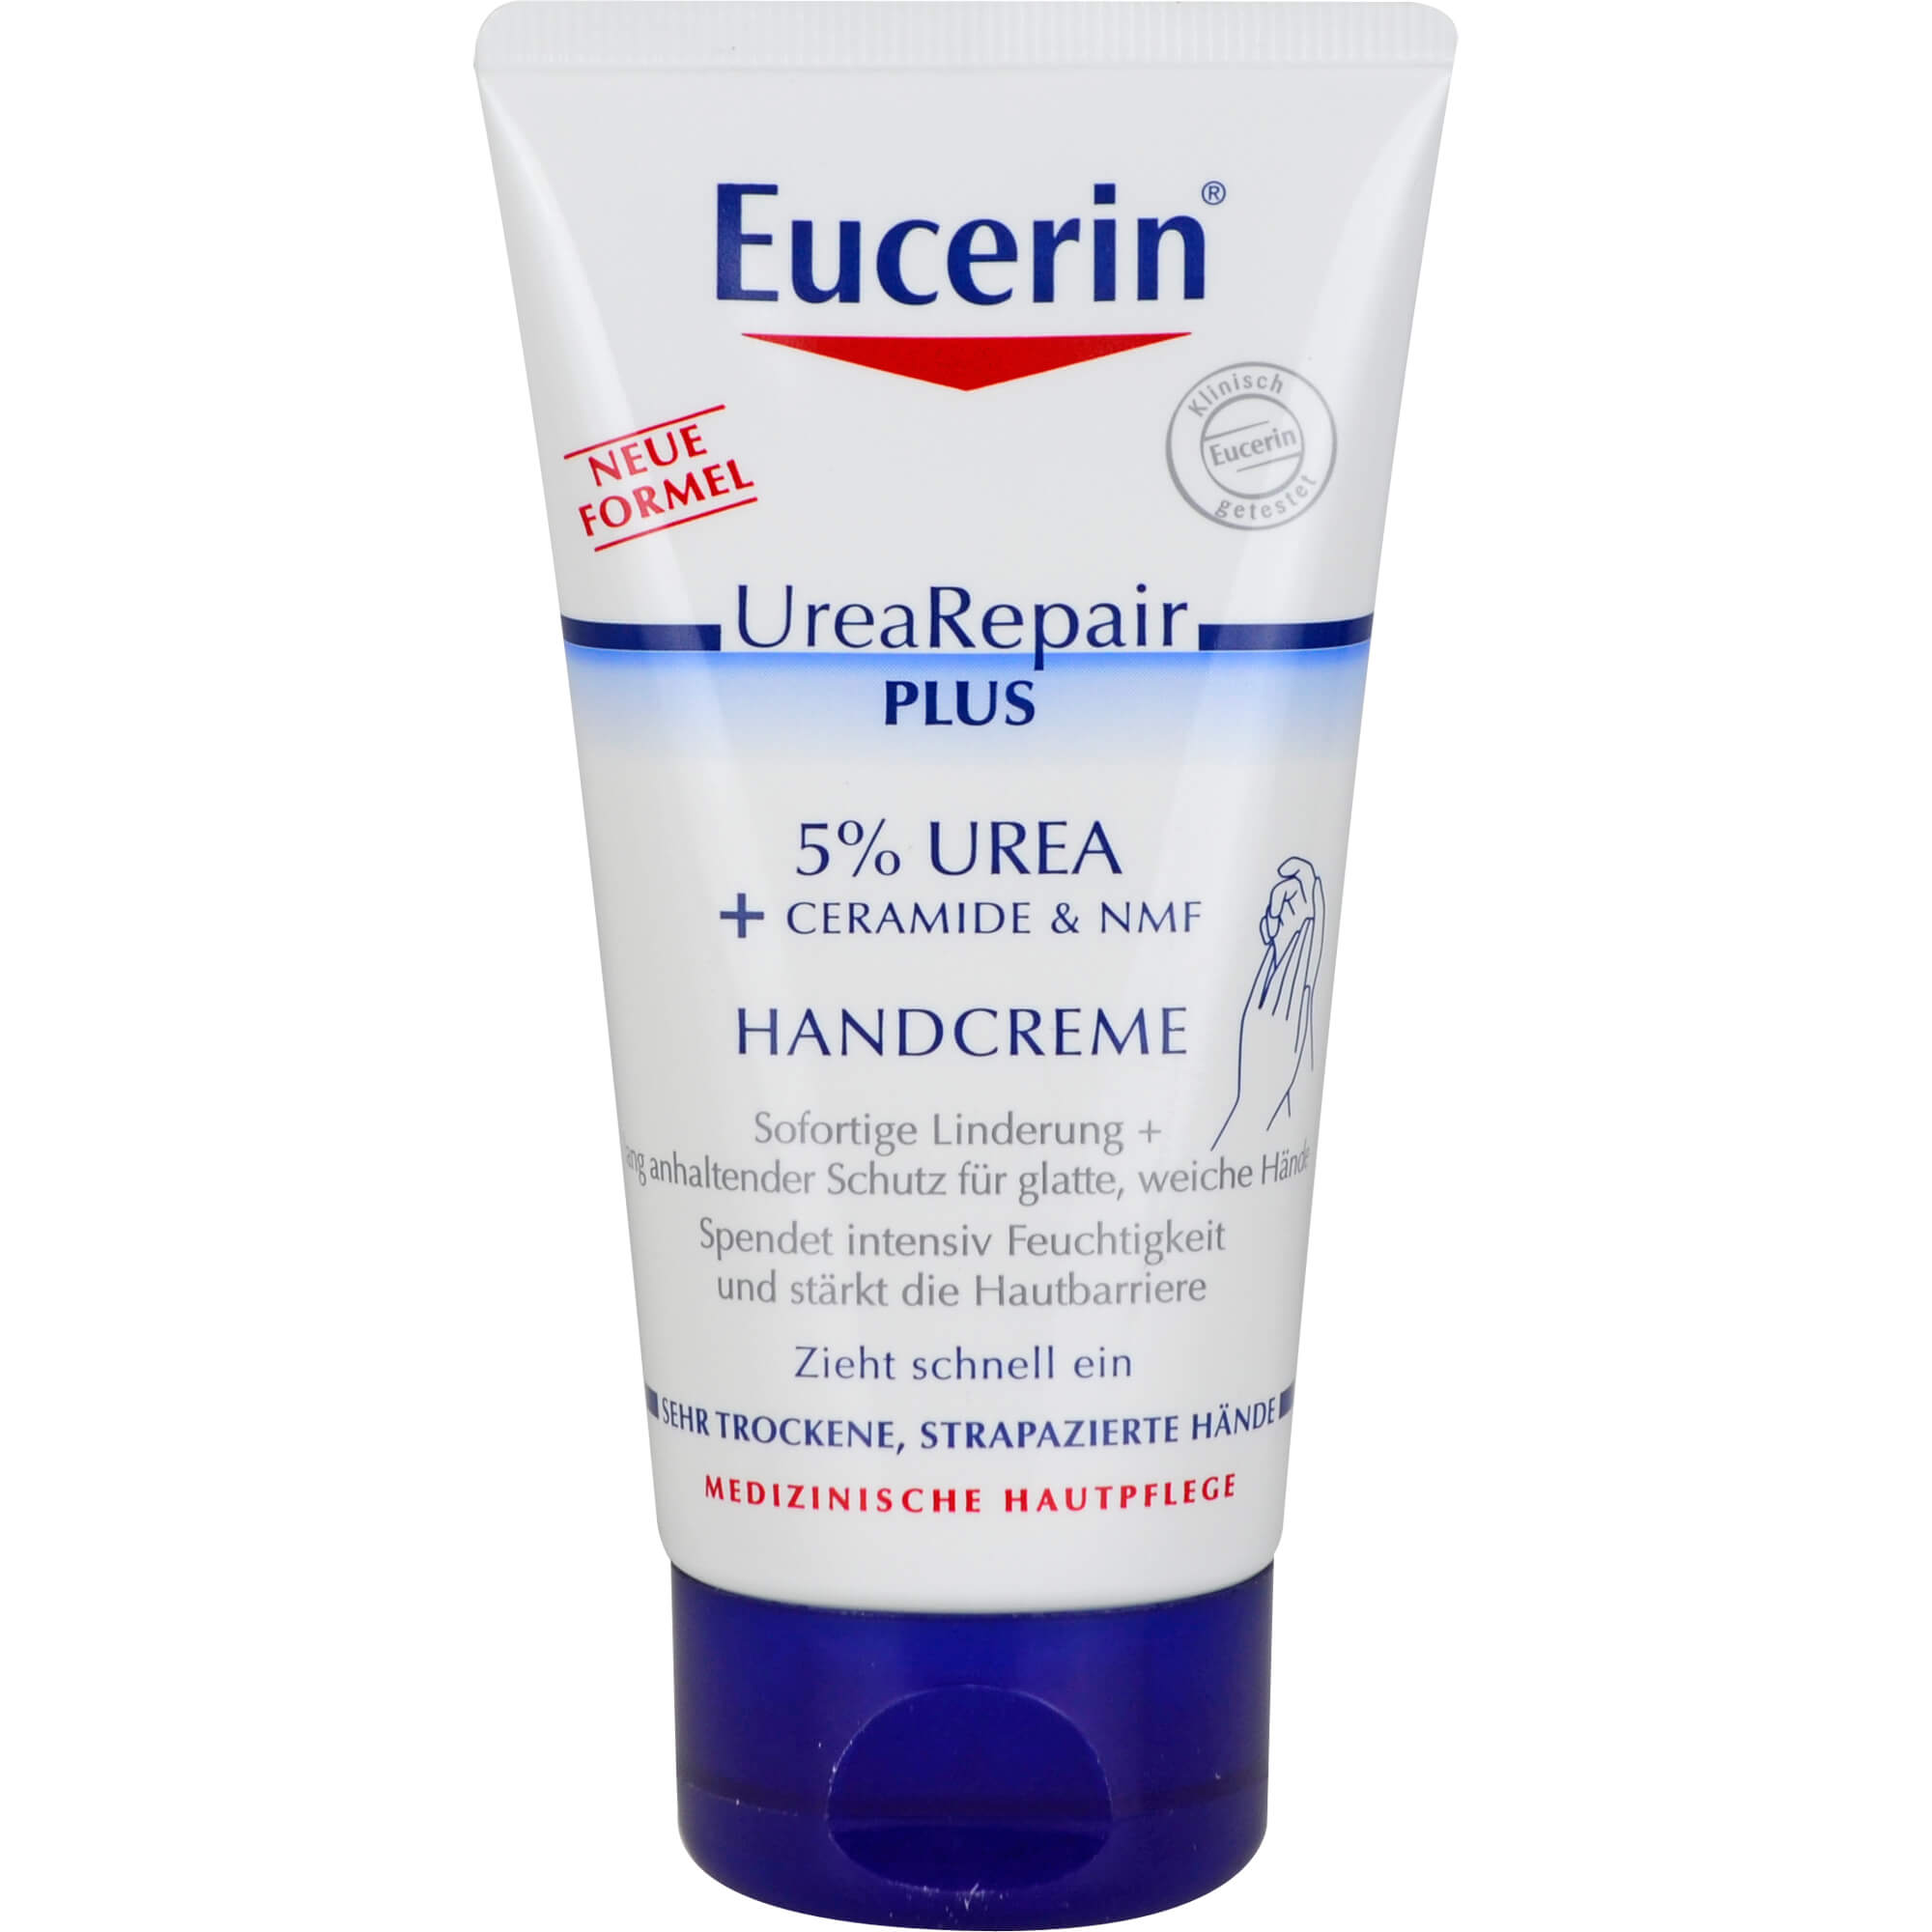 EUCERIN-UreaRepair-PLUS-Handcreme-5